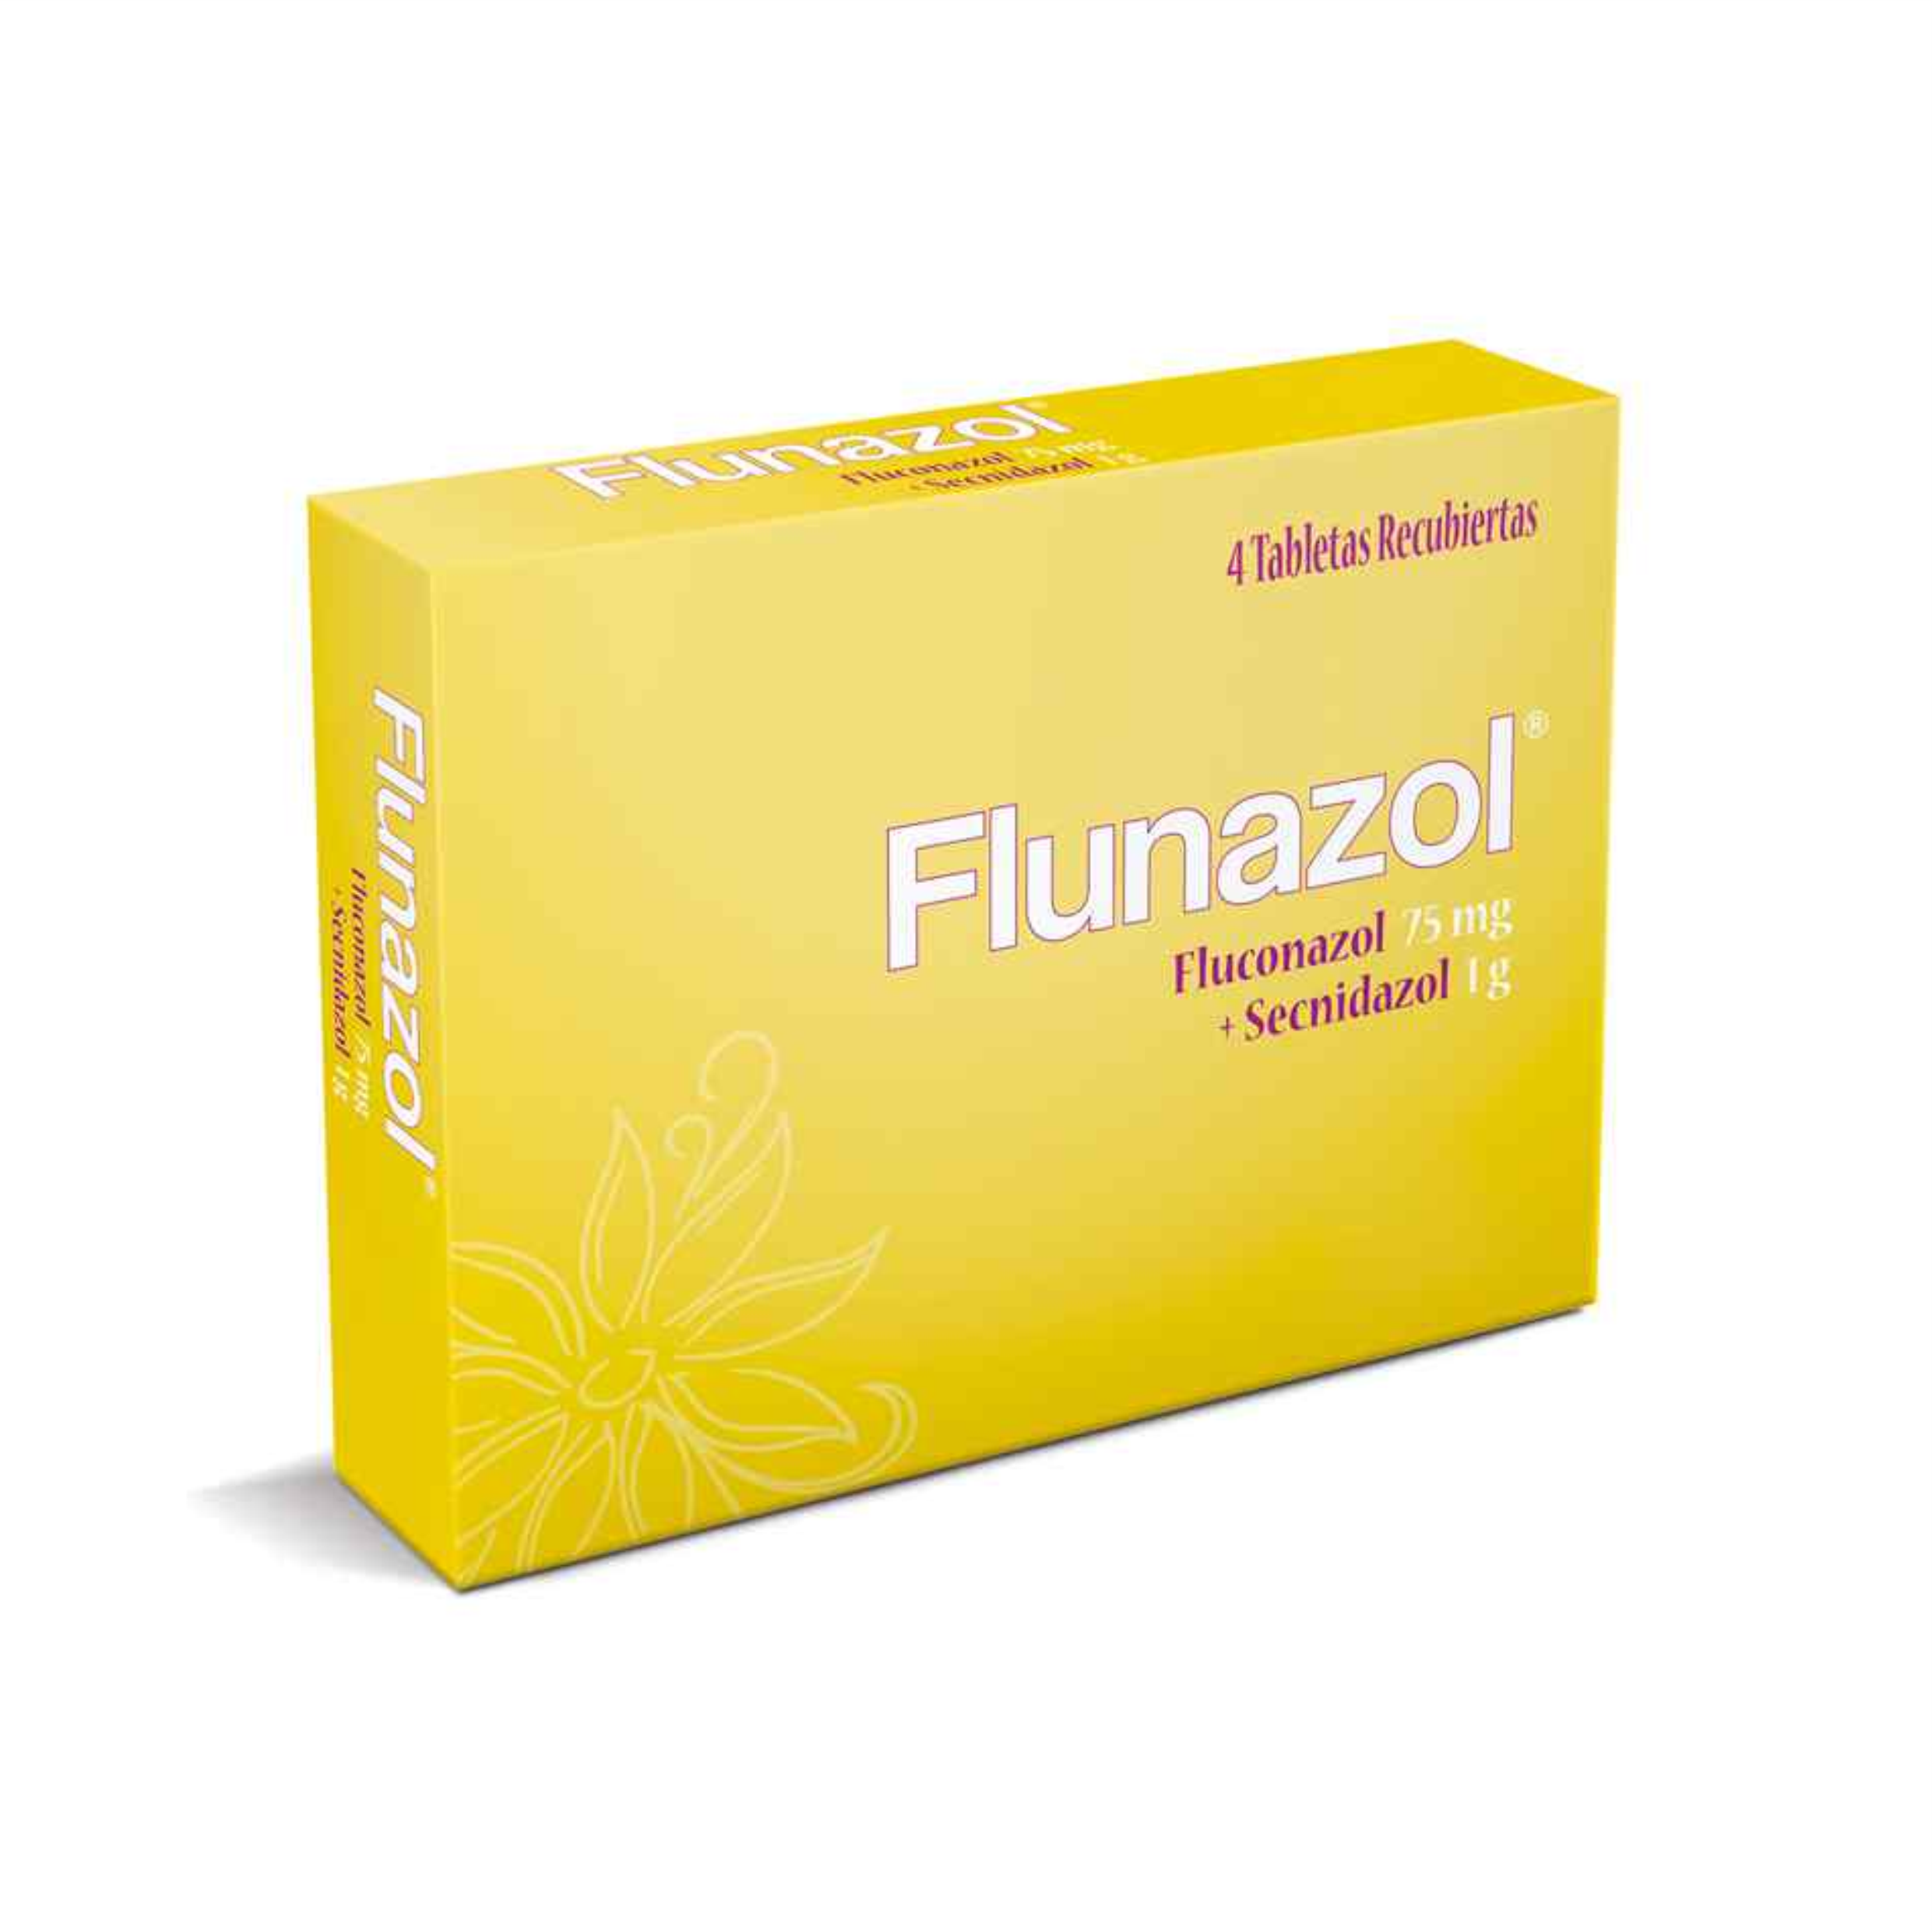 Flunazol Caja x 4 Tabletas Recubiertas